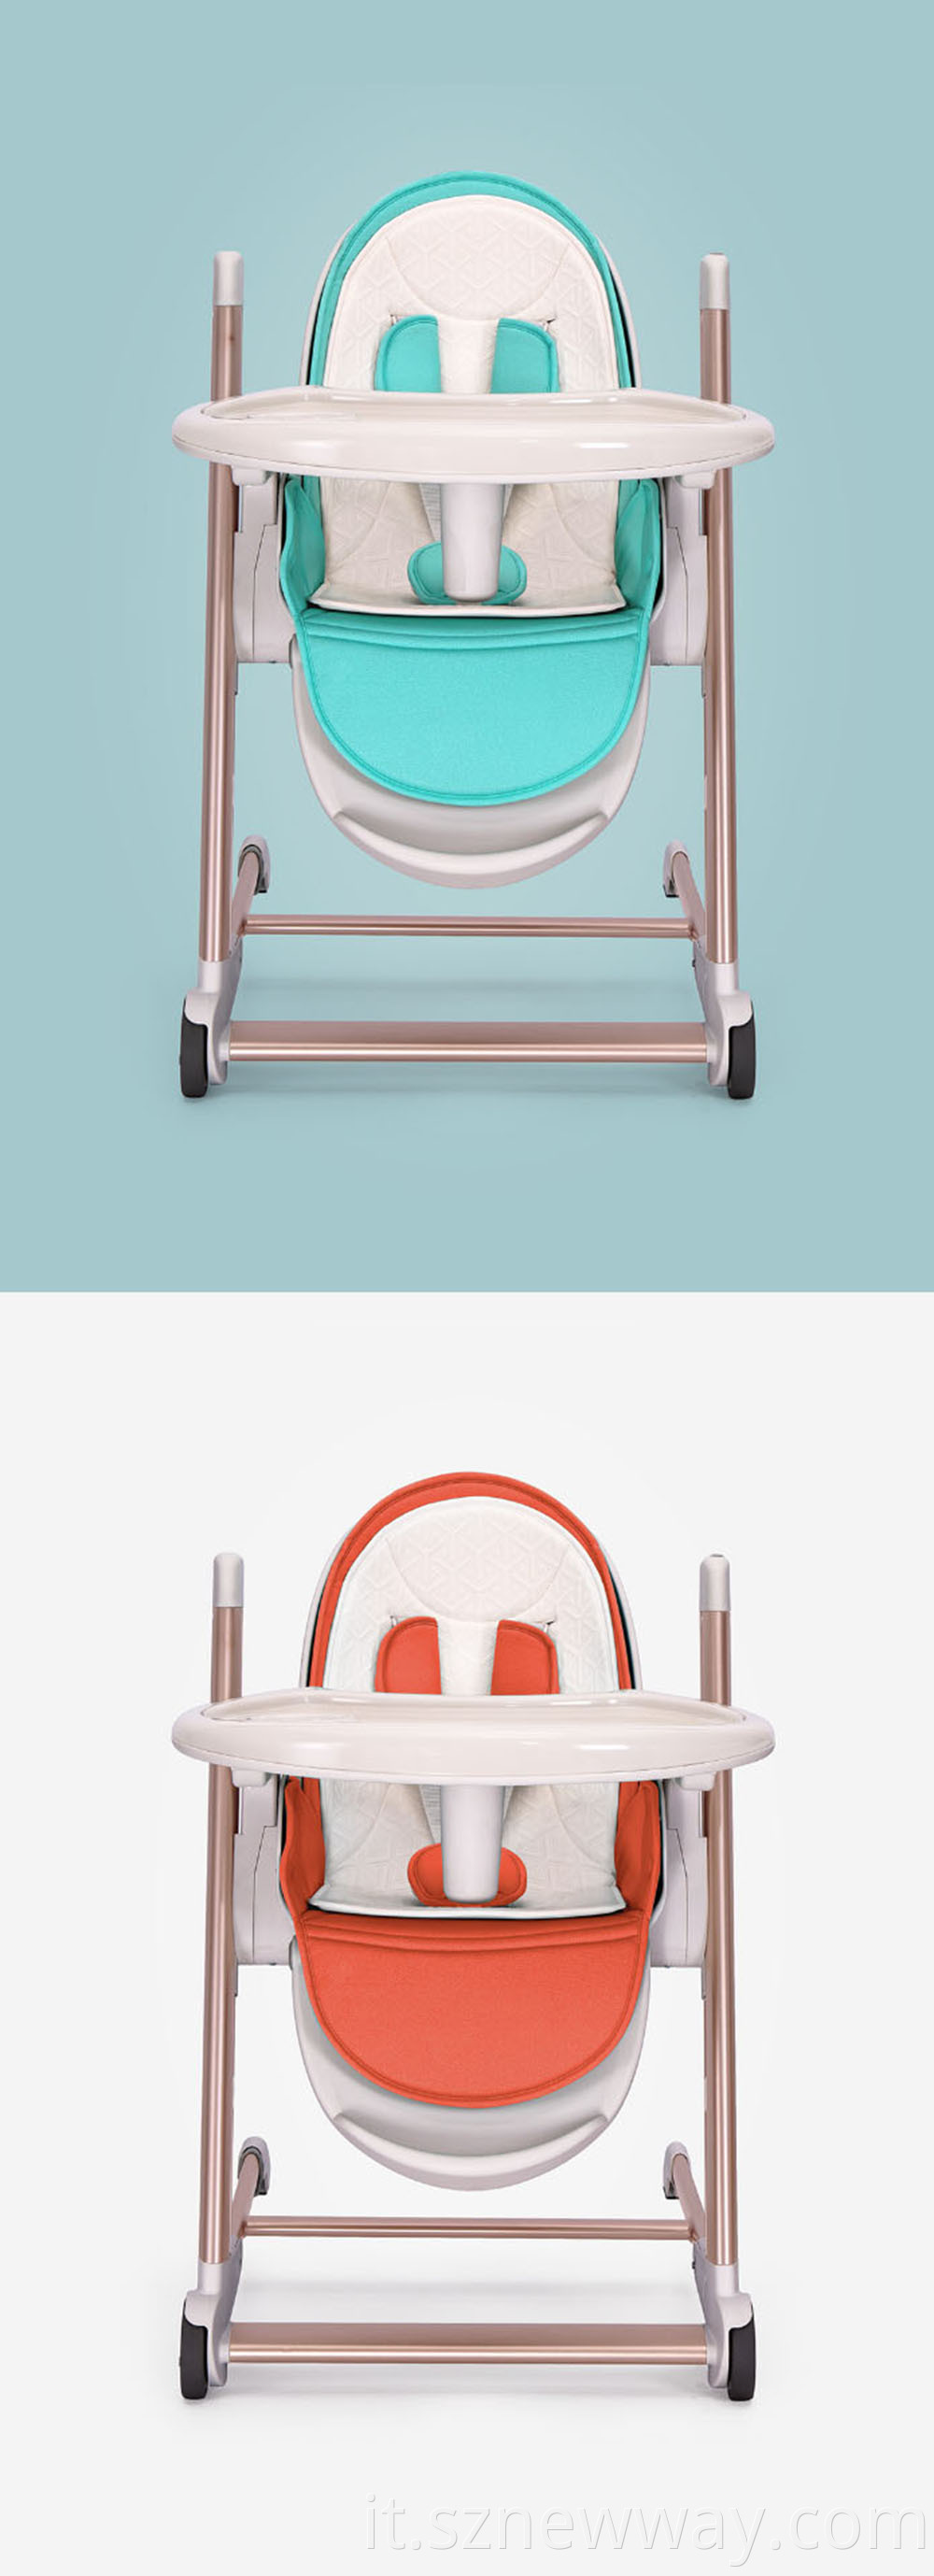 Bebehoo Infant Dining Chair